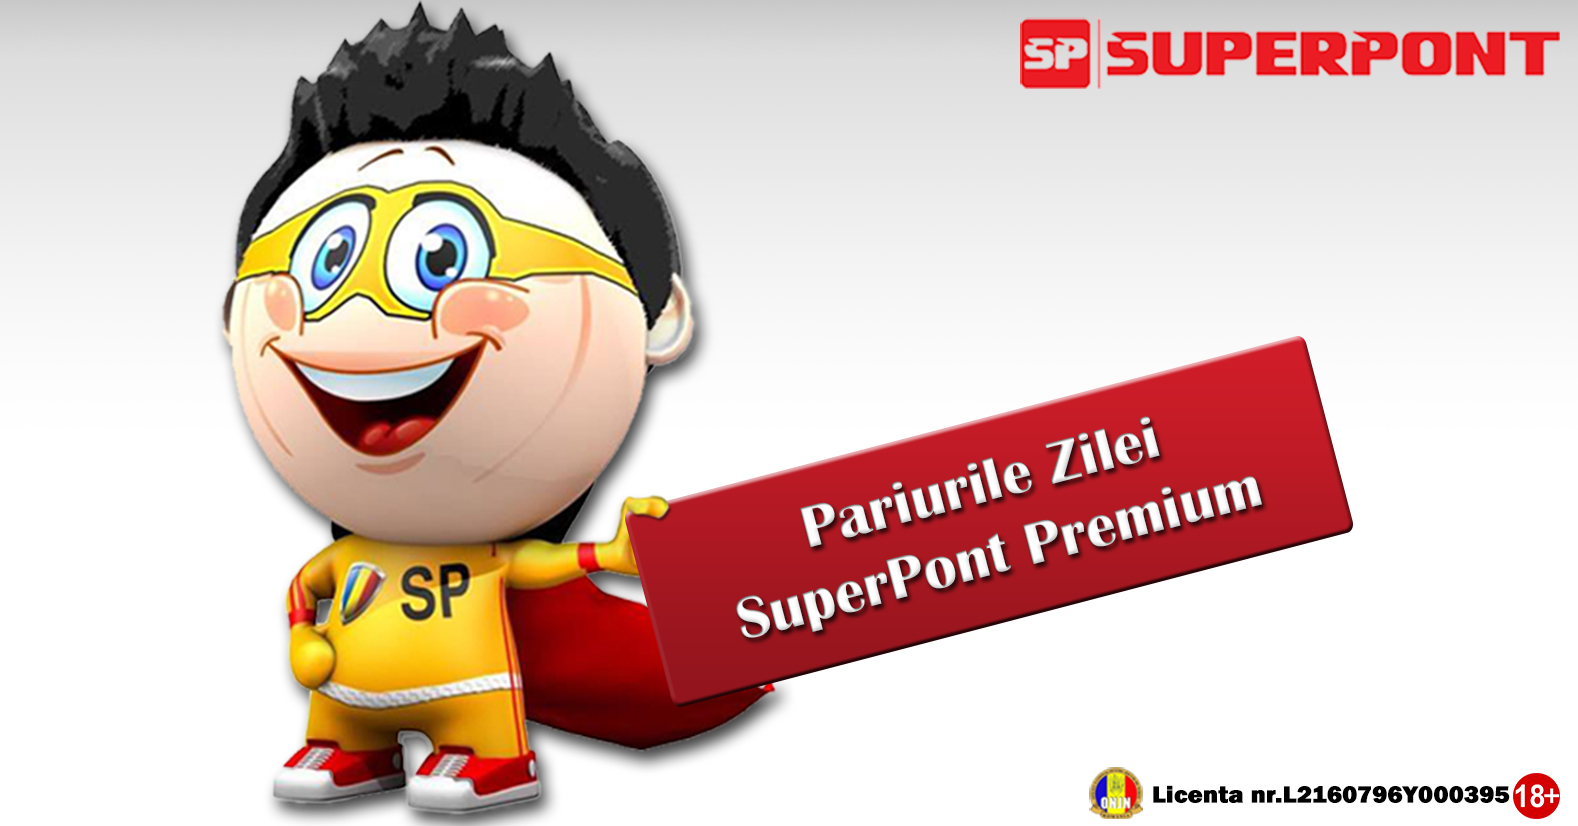 Pariurile Zilei SuperPont Premium 8 ianuarie 2019